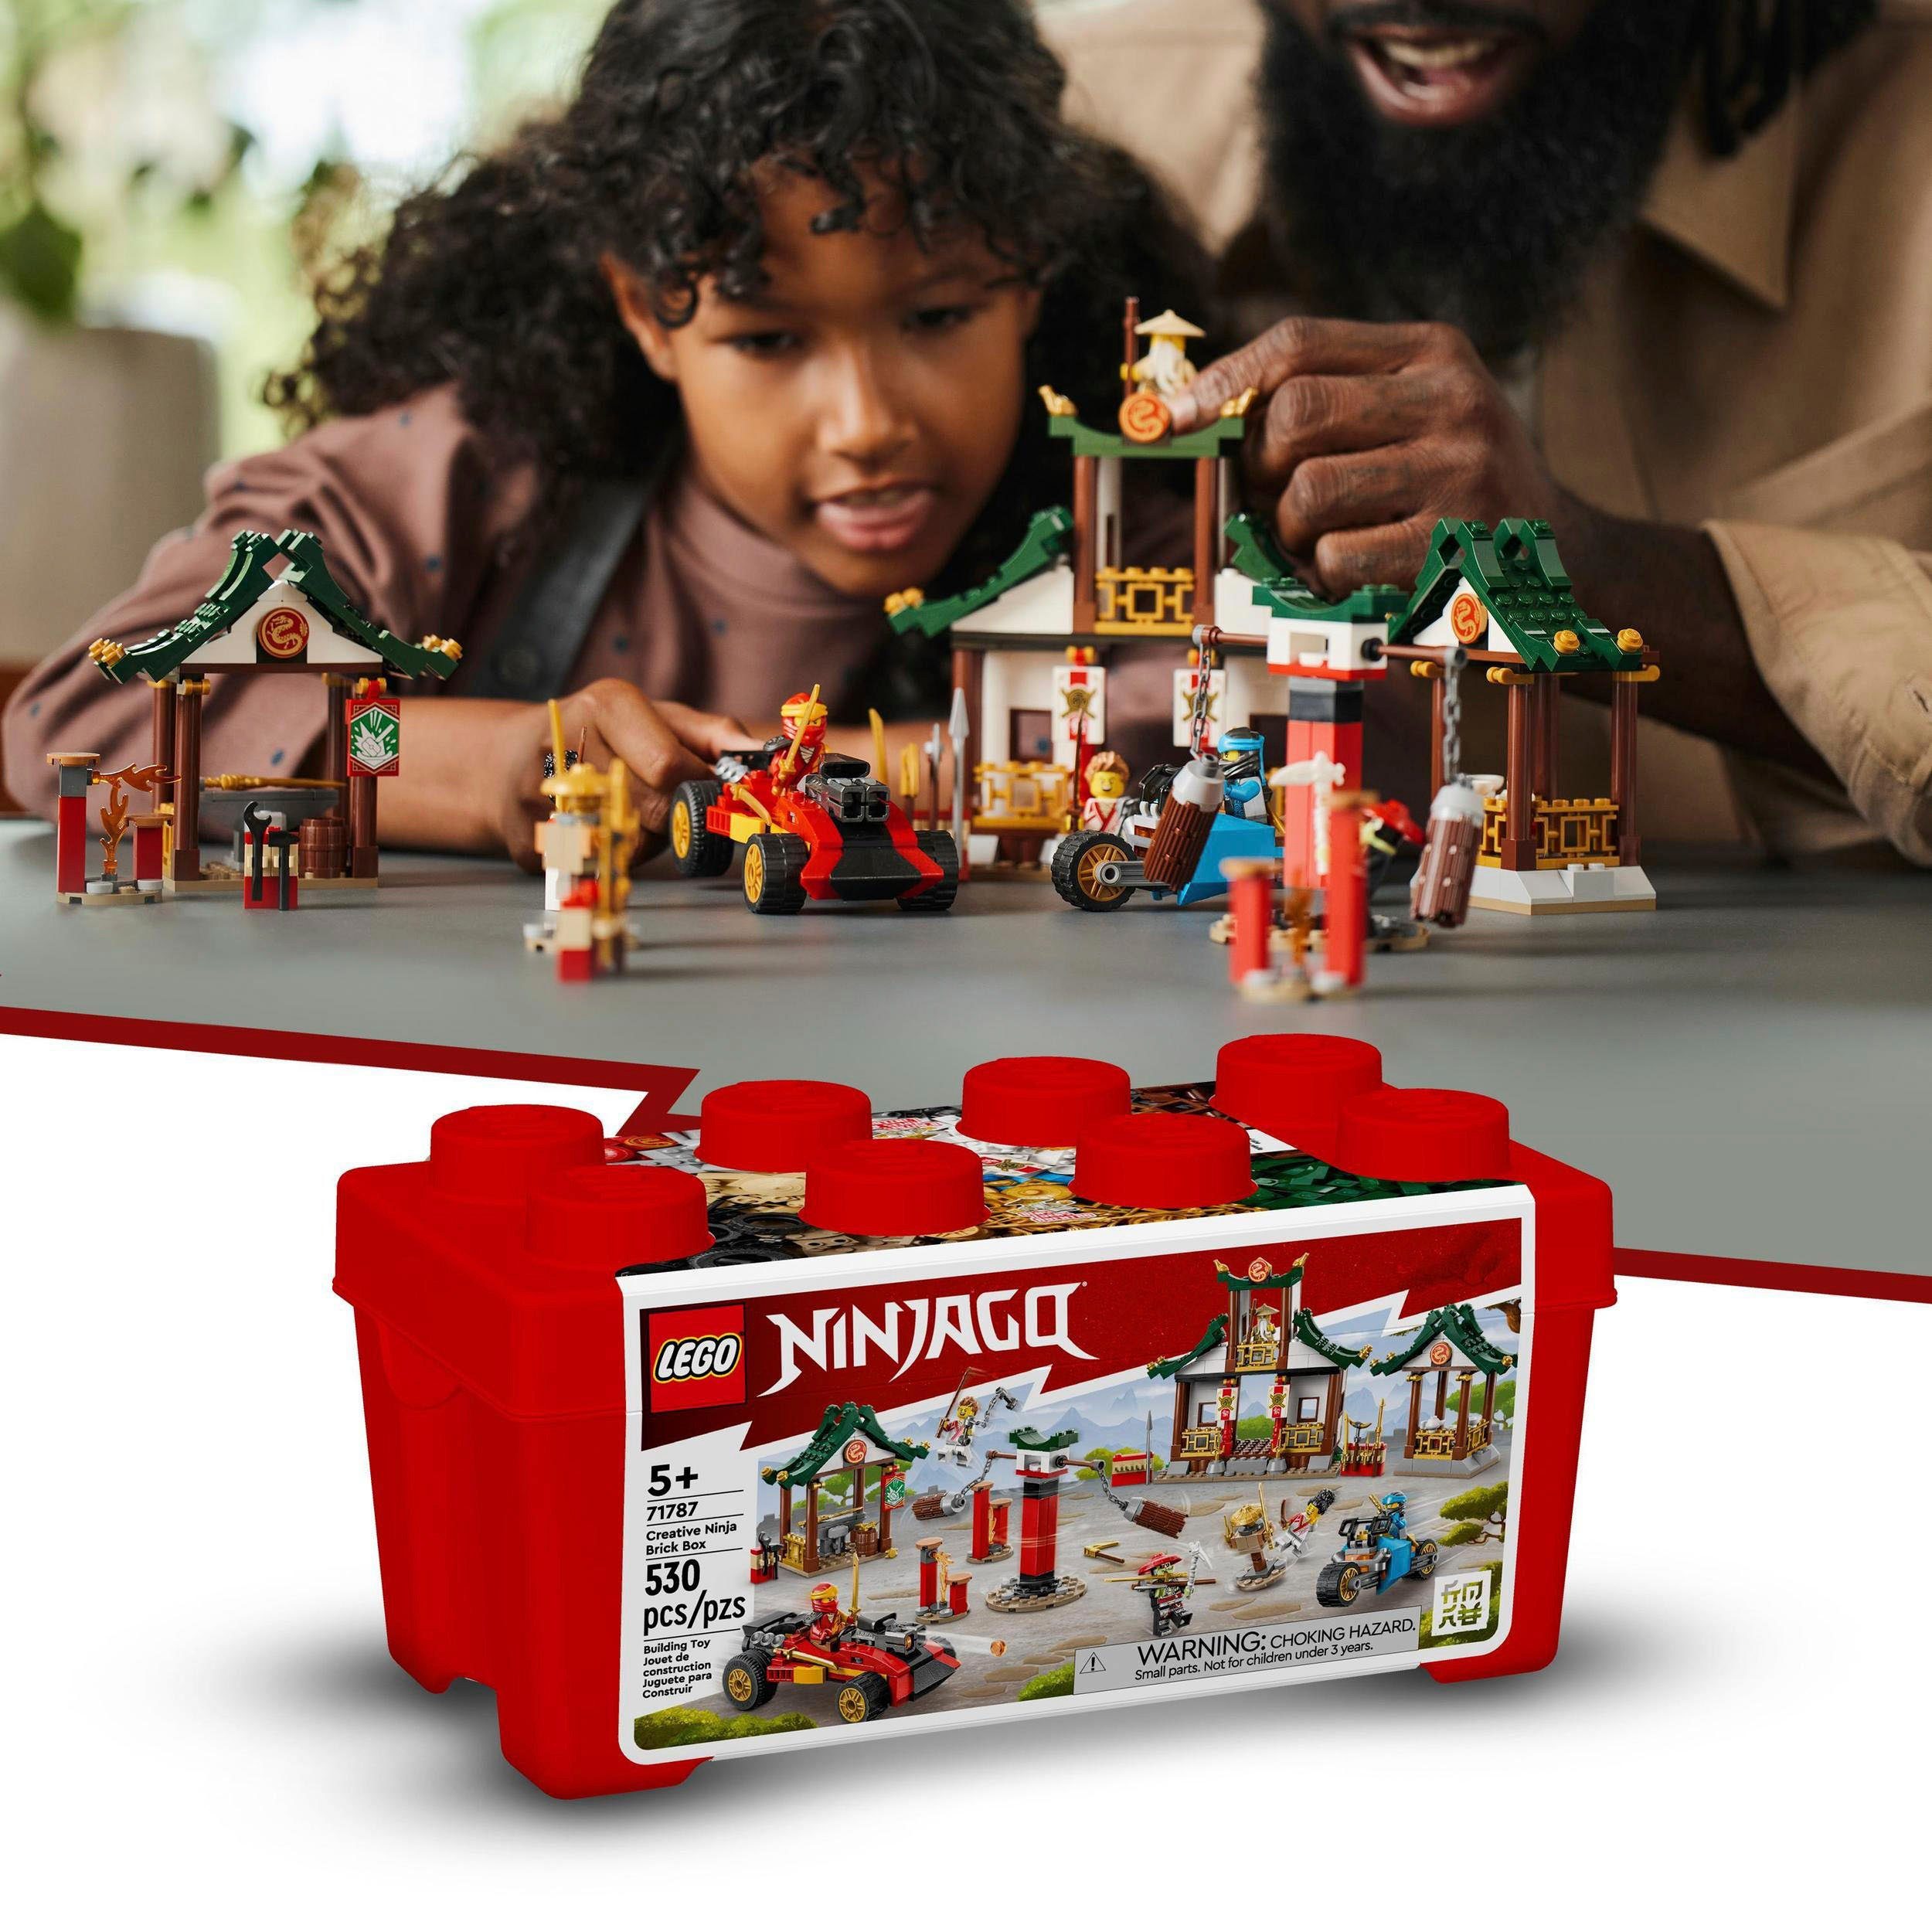 NINJAGO, Europe Made in (530 LEGO® Ninja St), (71787), Konstruktionsspielsteine Steinebox Kreative LEGO®